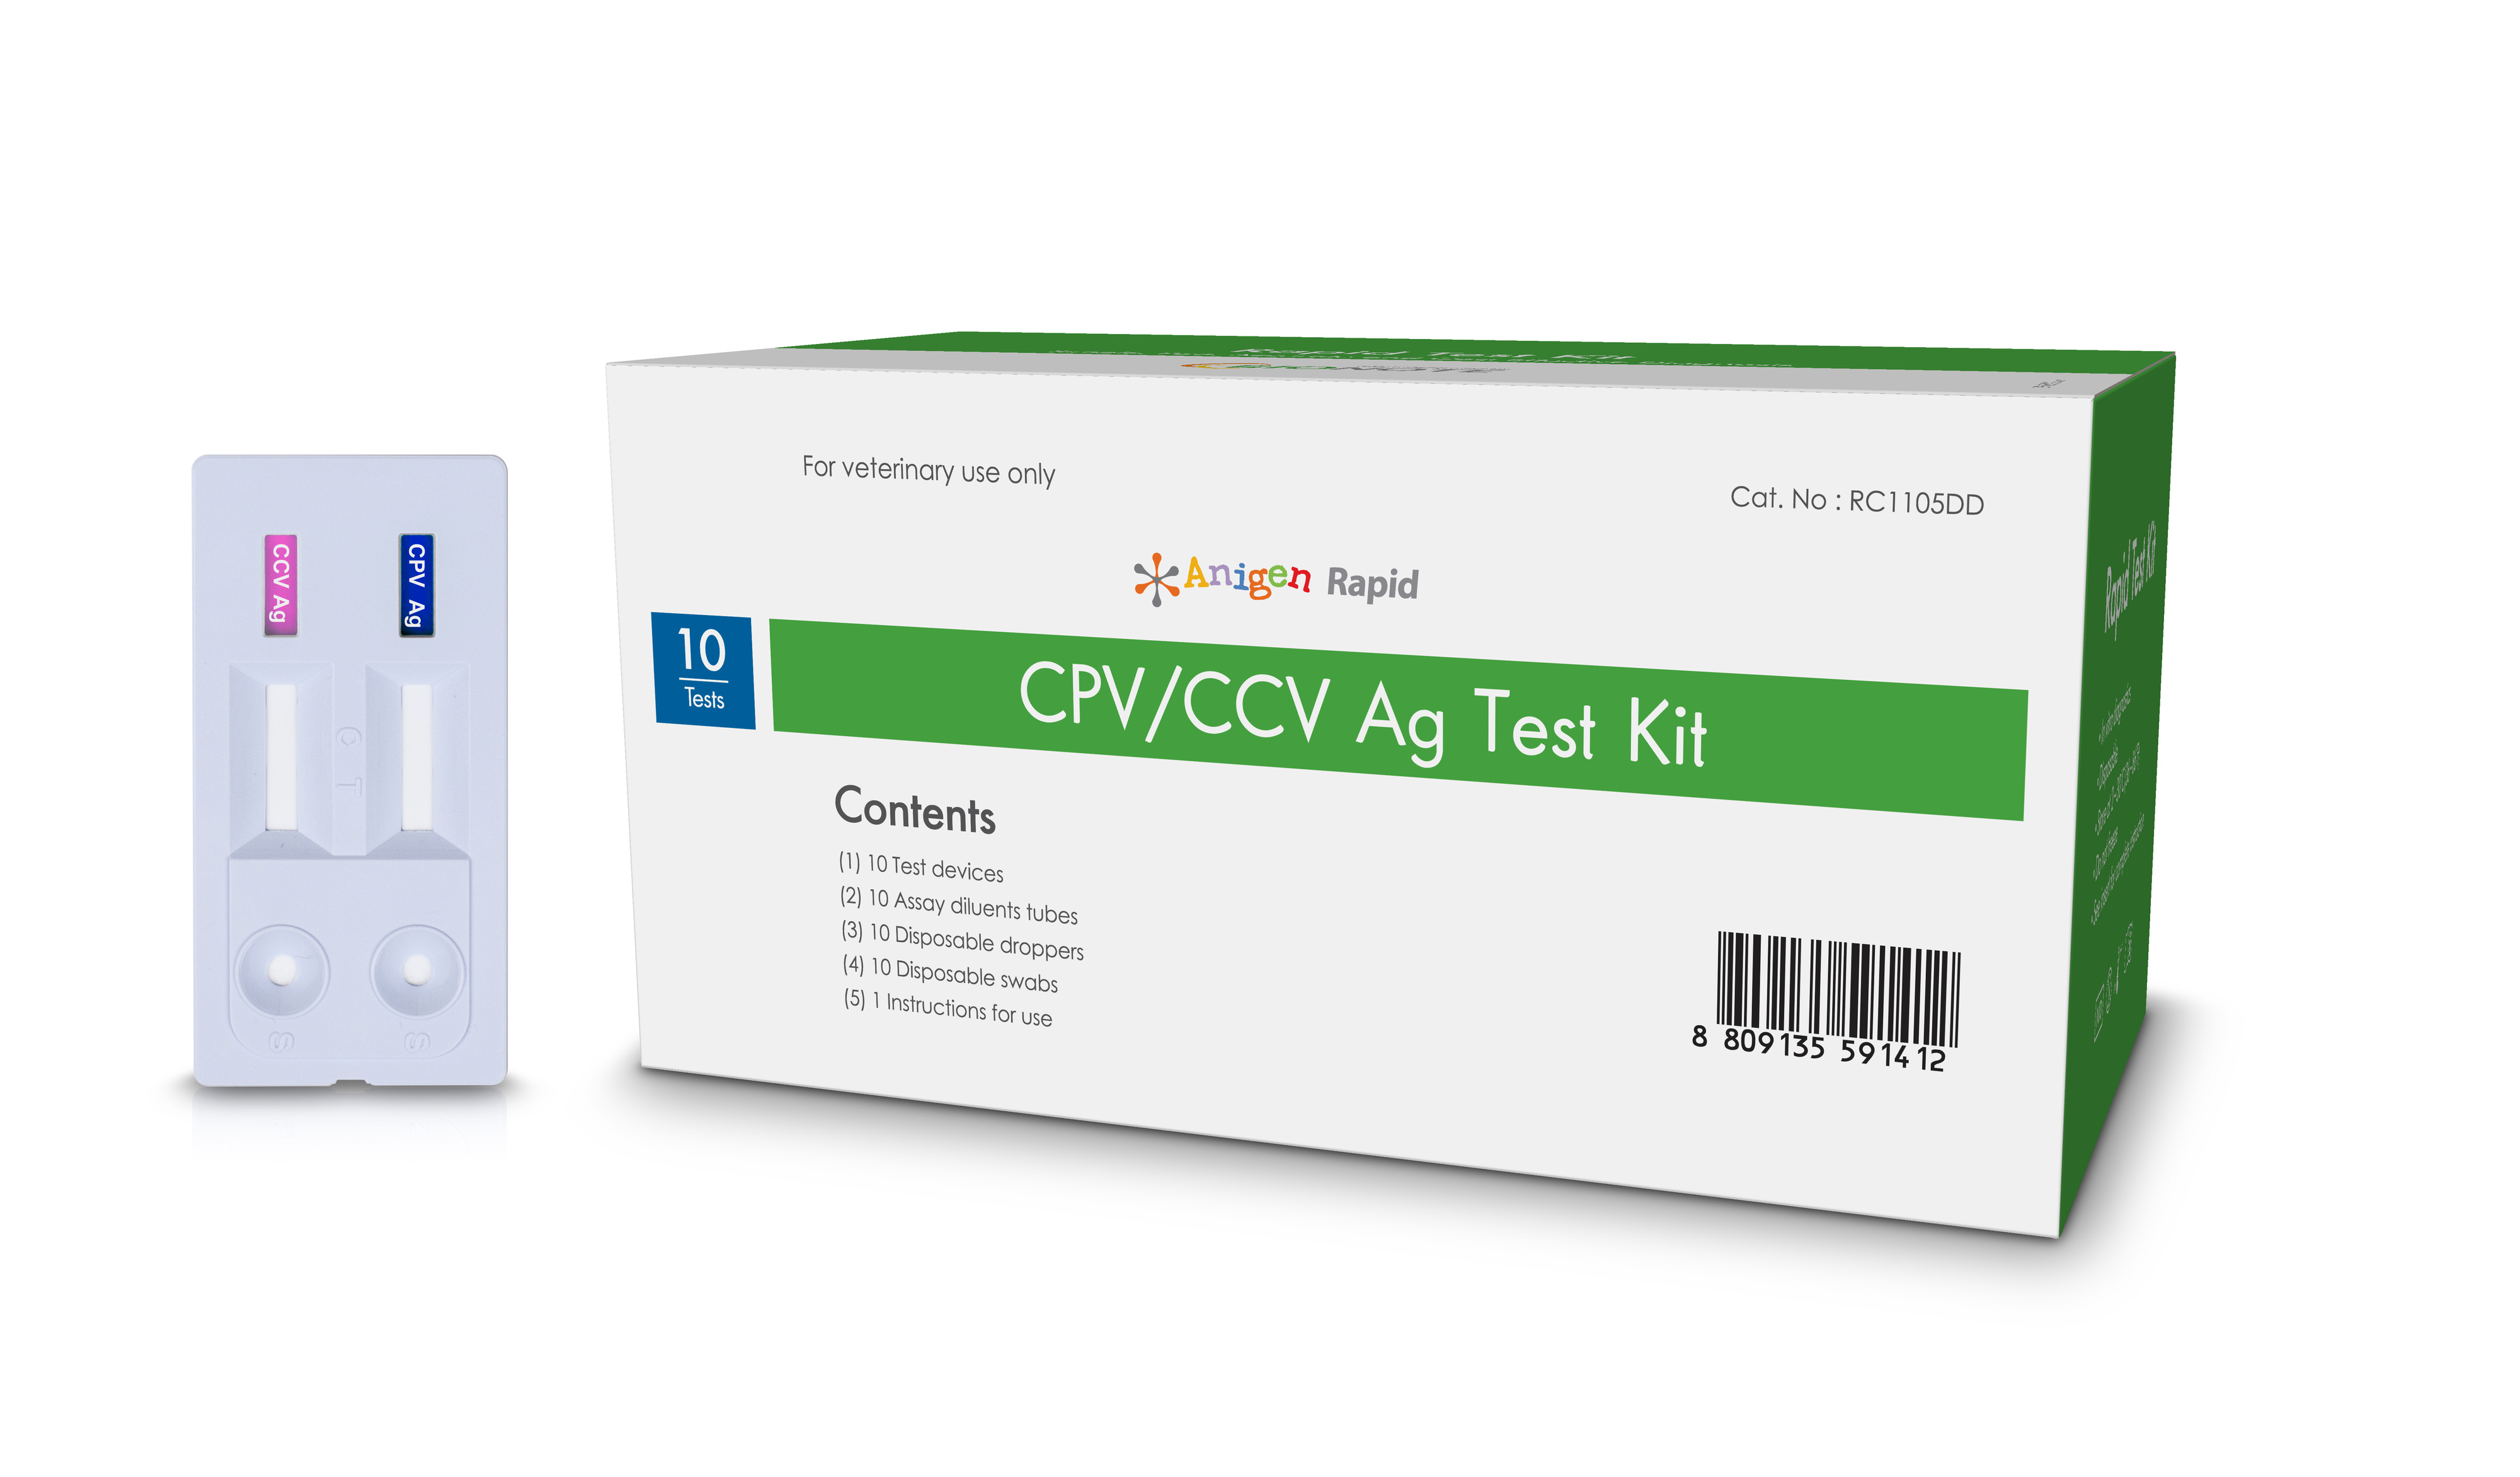 Snabbtest CPV/CCV Ag Test Kit